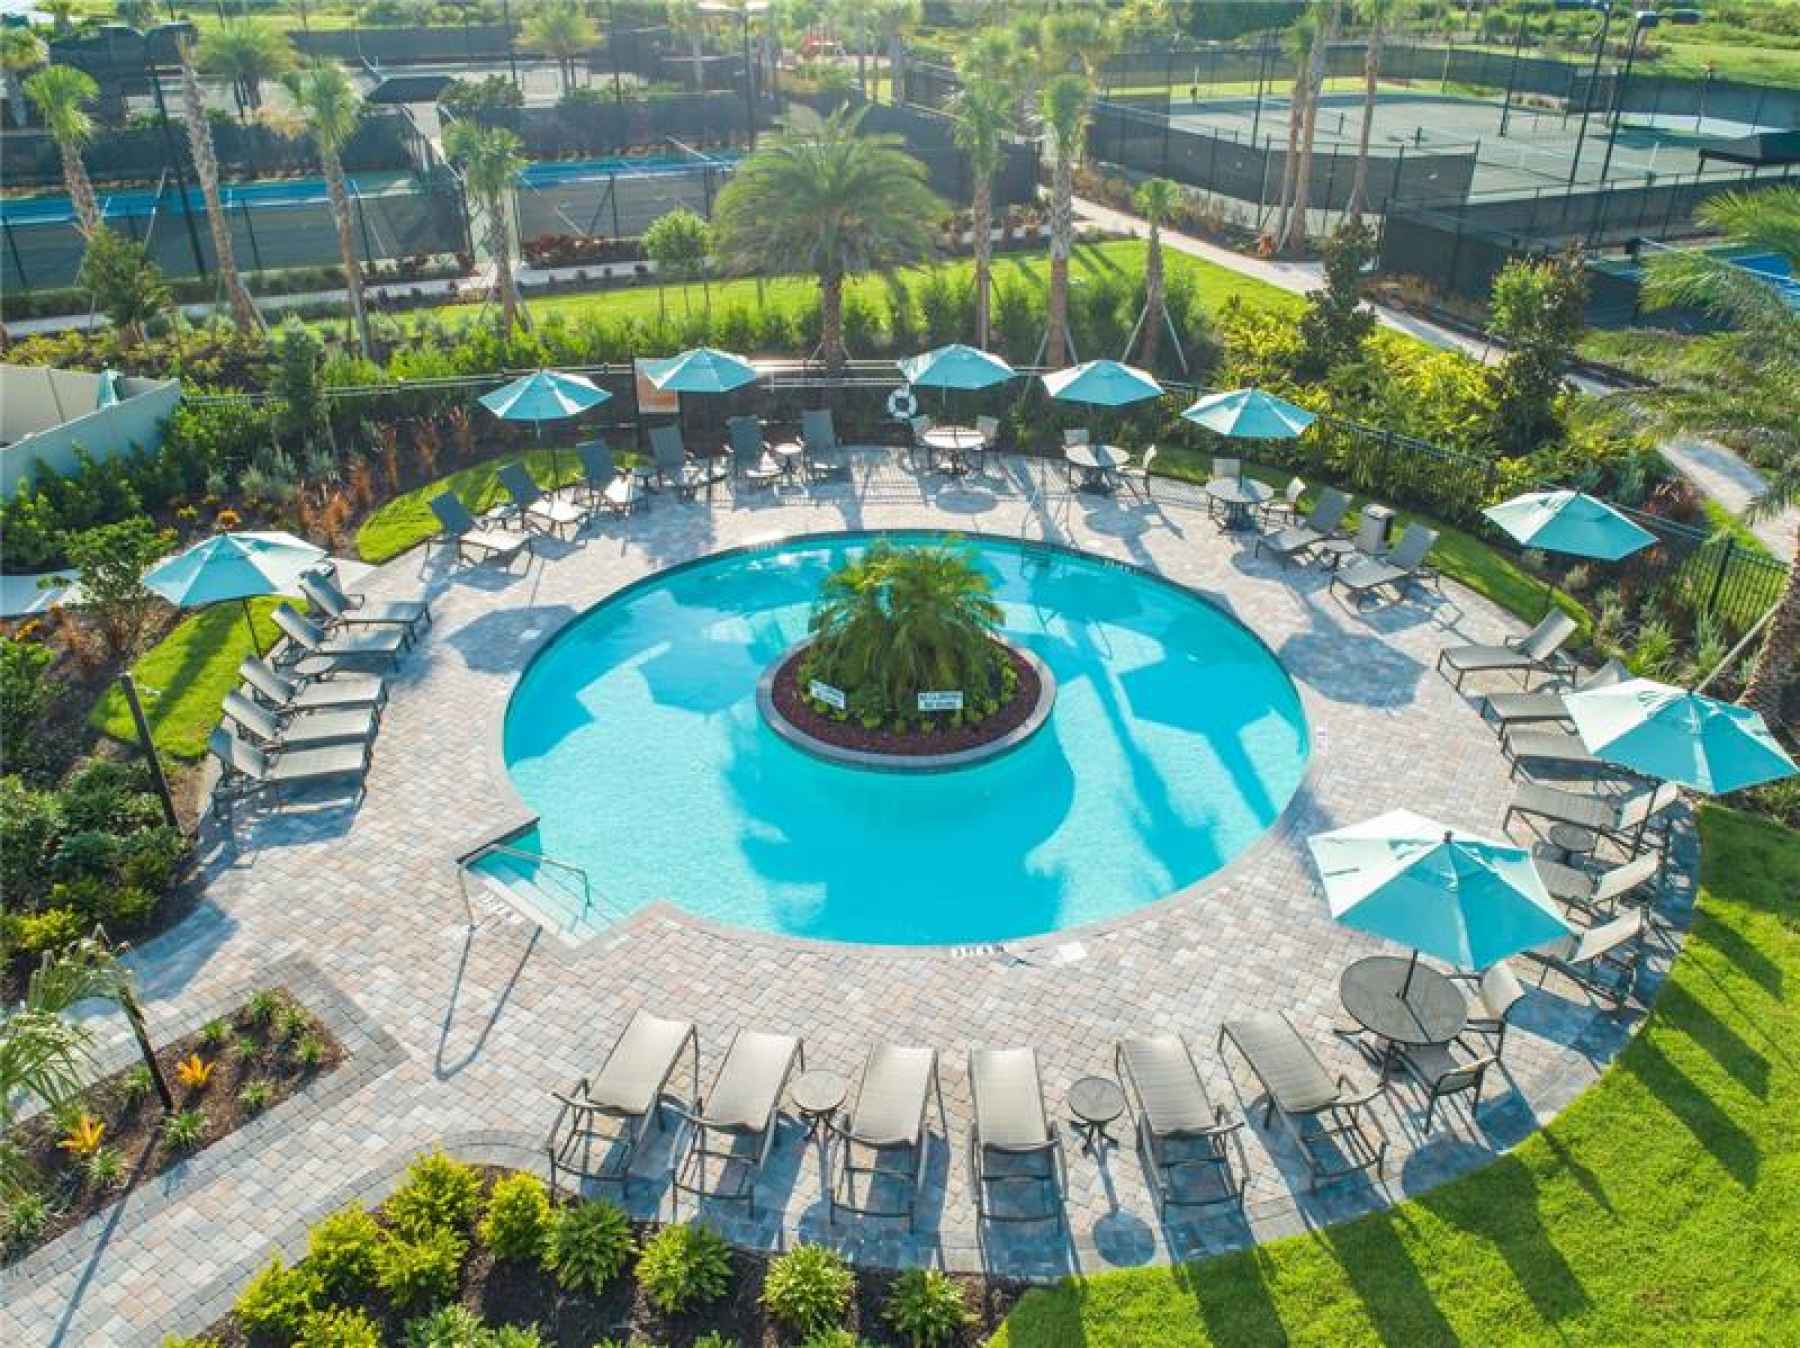 Resort Style pools!